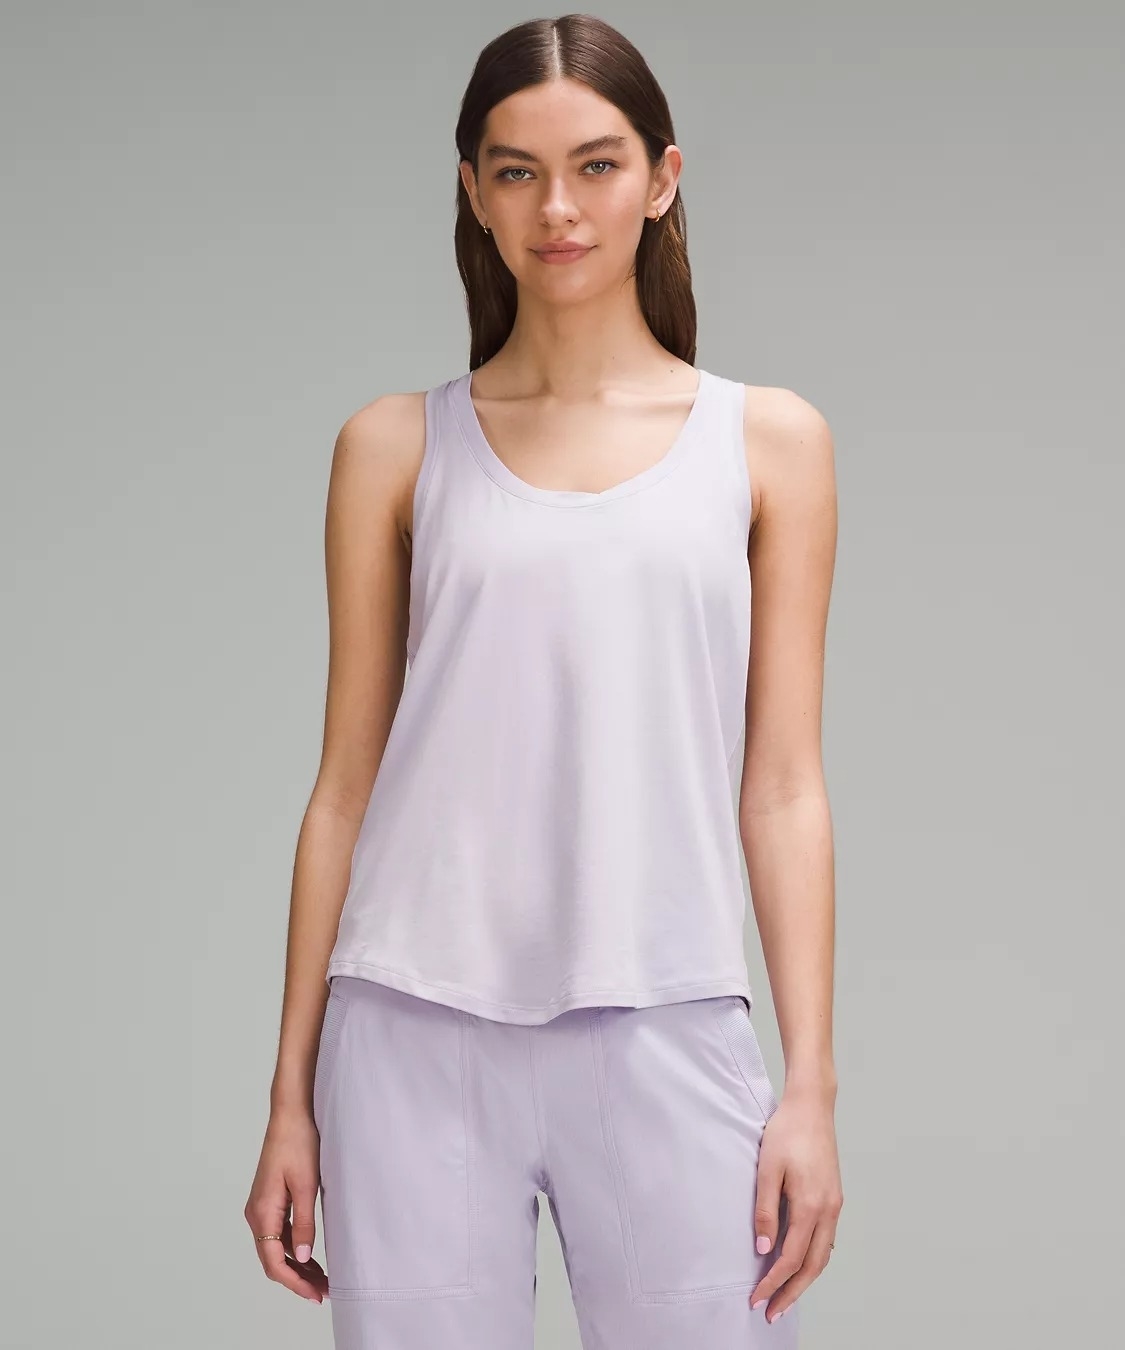 Model wearing light purple sleeveless workout tank